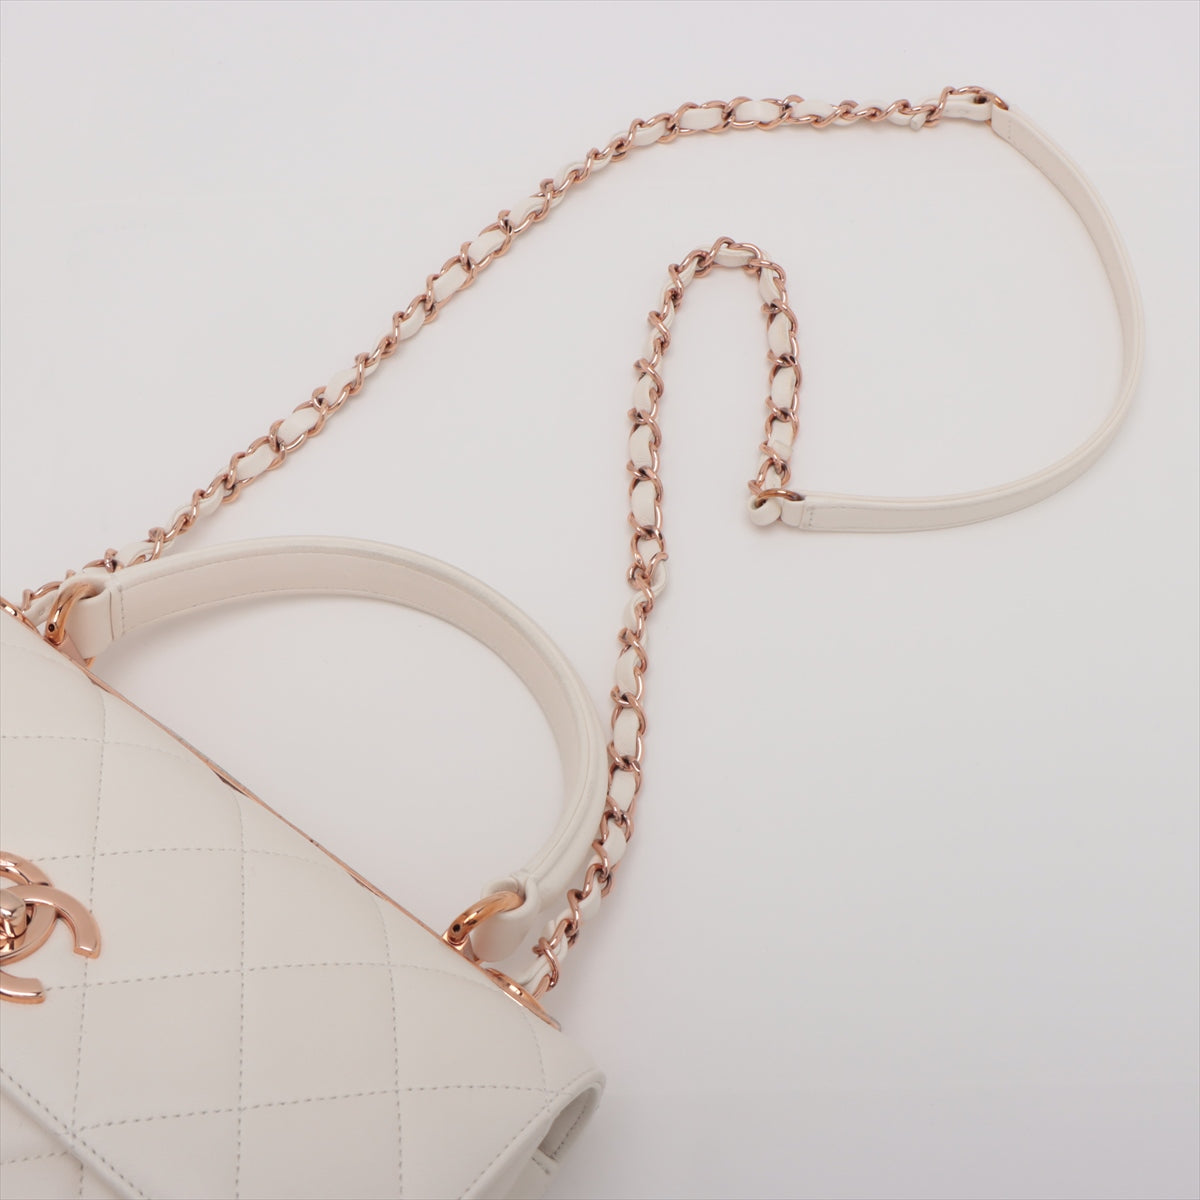 Chanel Matrasse  2WAY Handbag White Pink G Gold